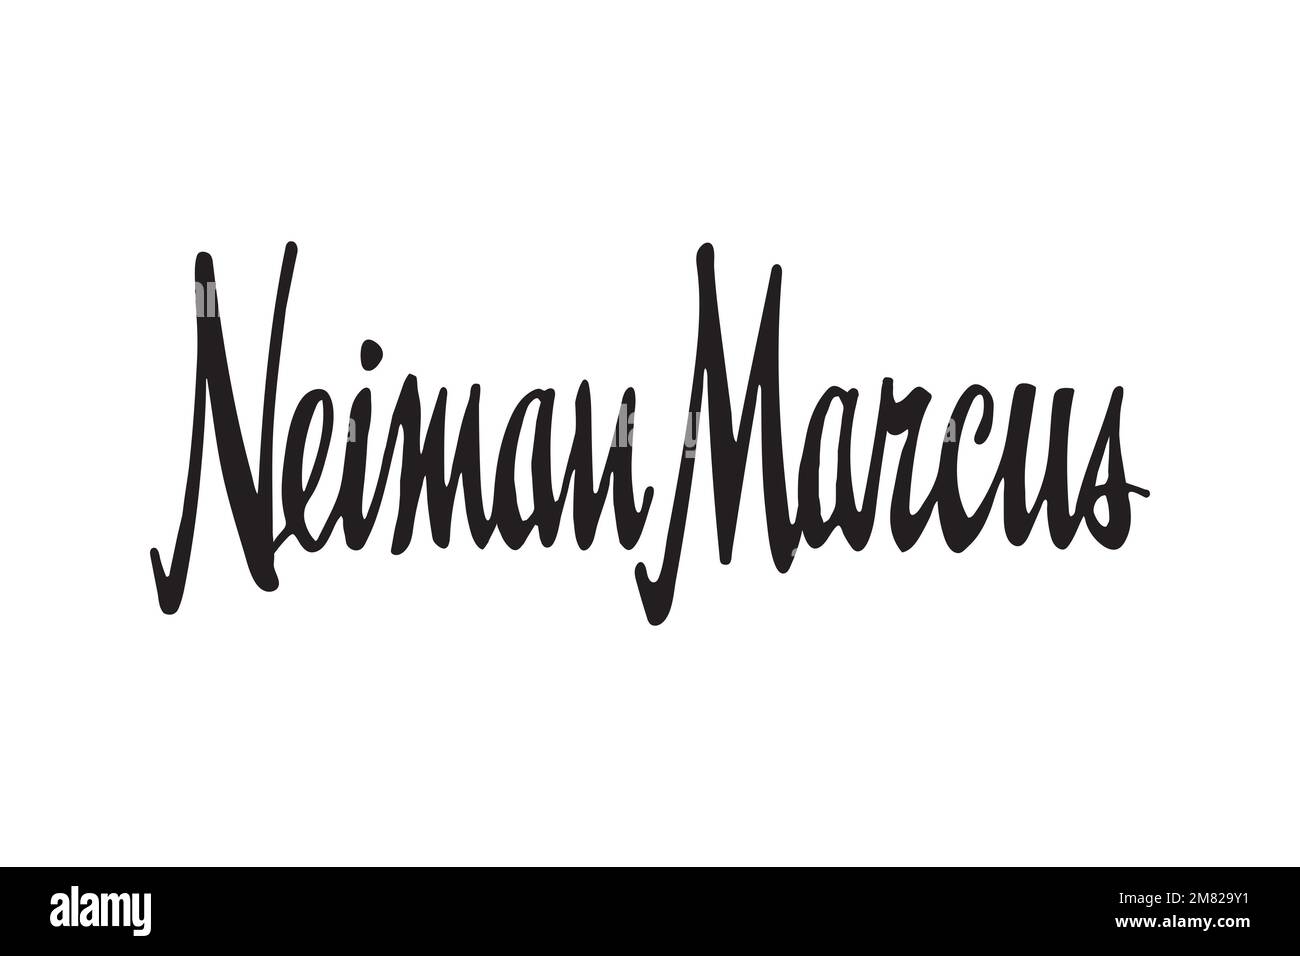 Neiman marcus Stock Photos, Royalty Free Neiman marcus Images